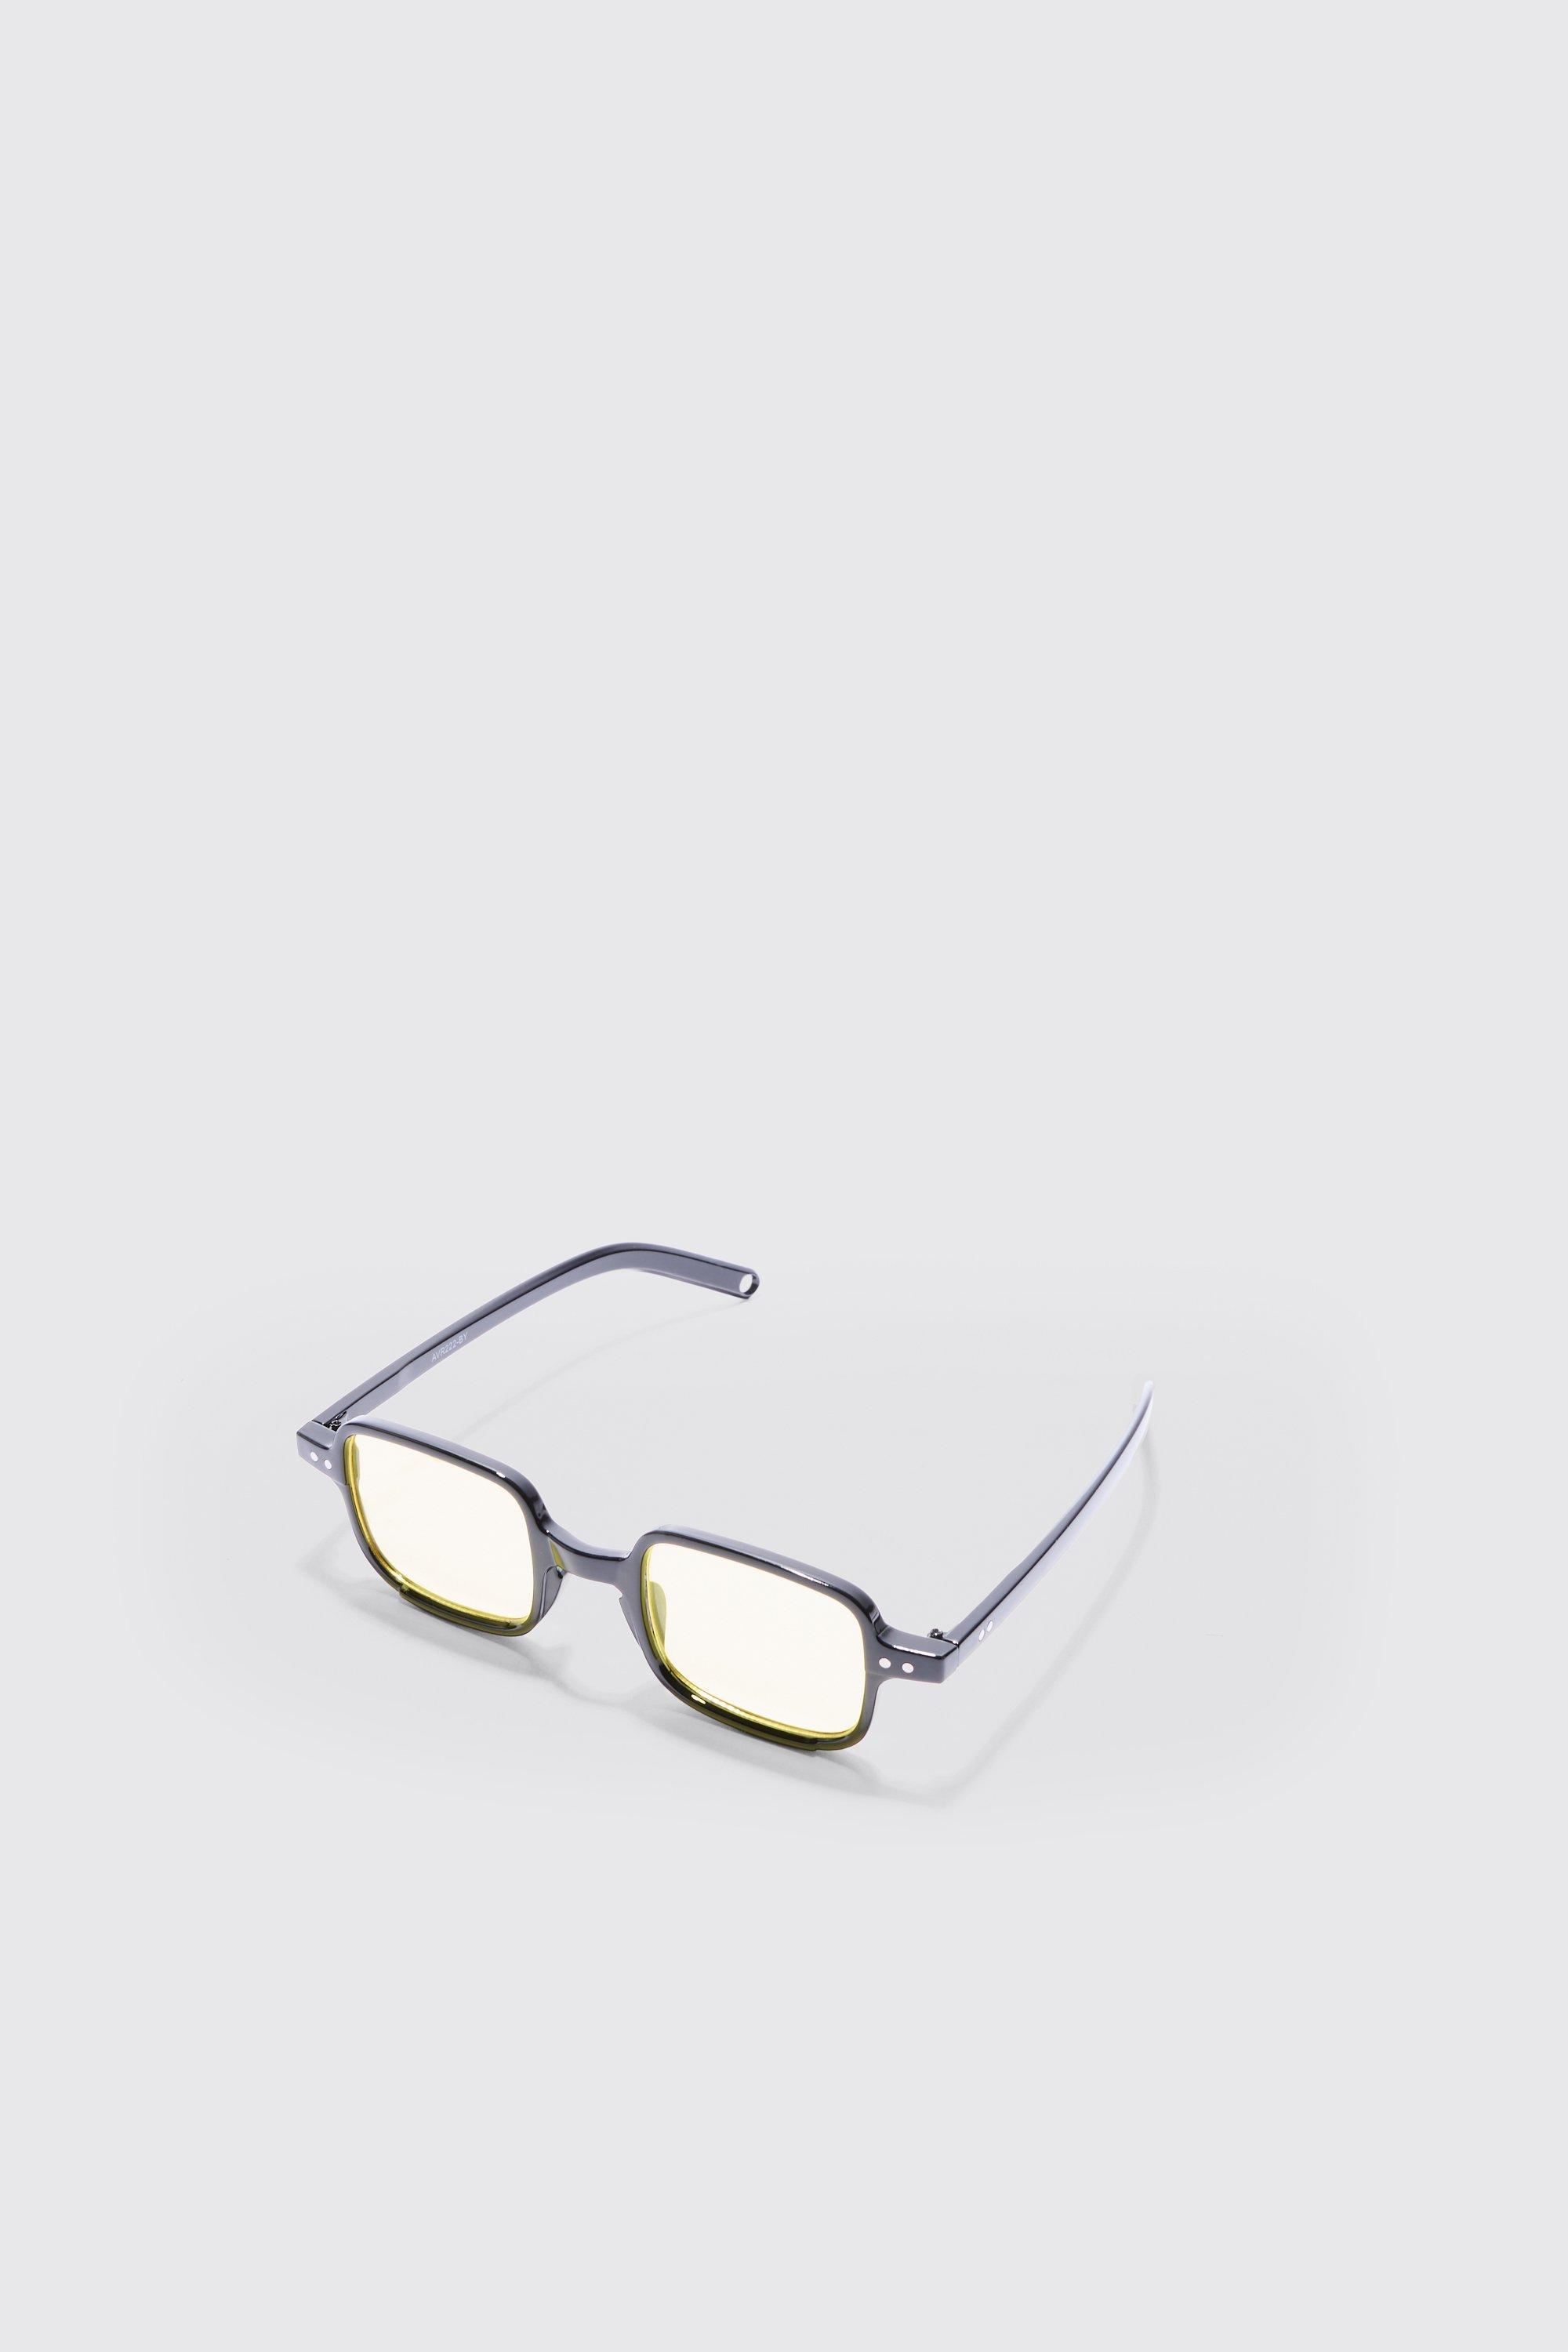 Image of Square Yellow Lens Sunglasses In Black, Nero